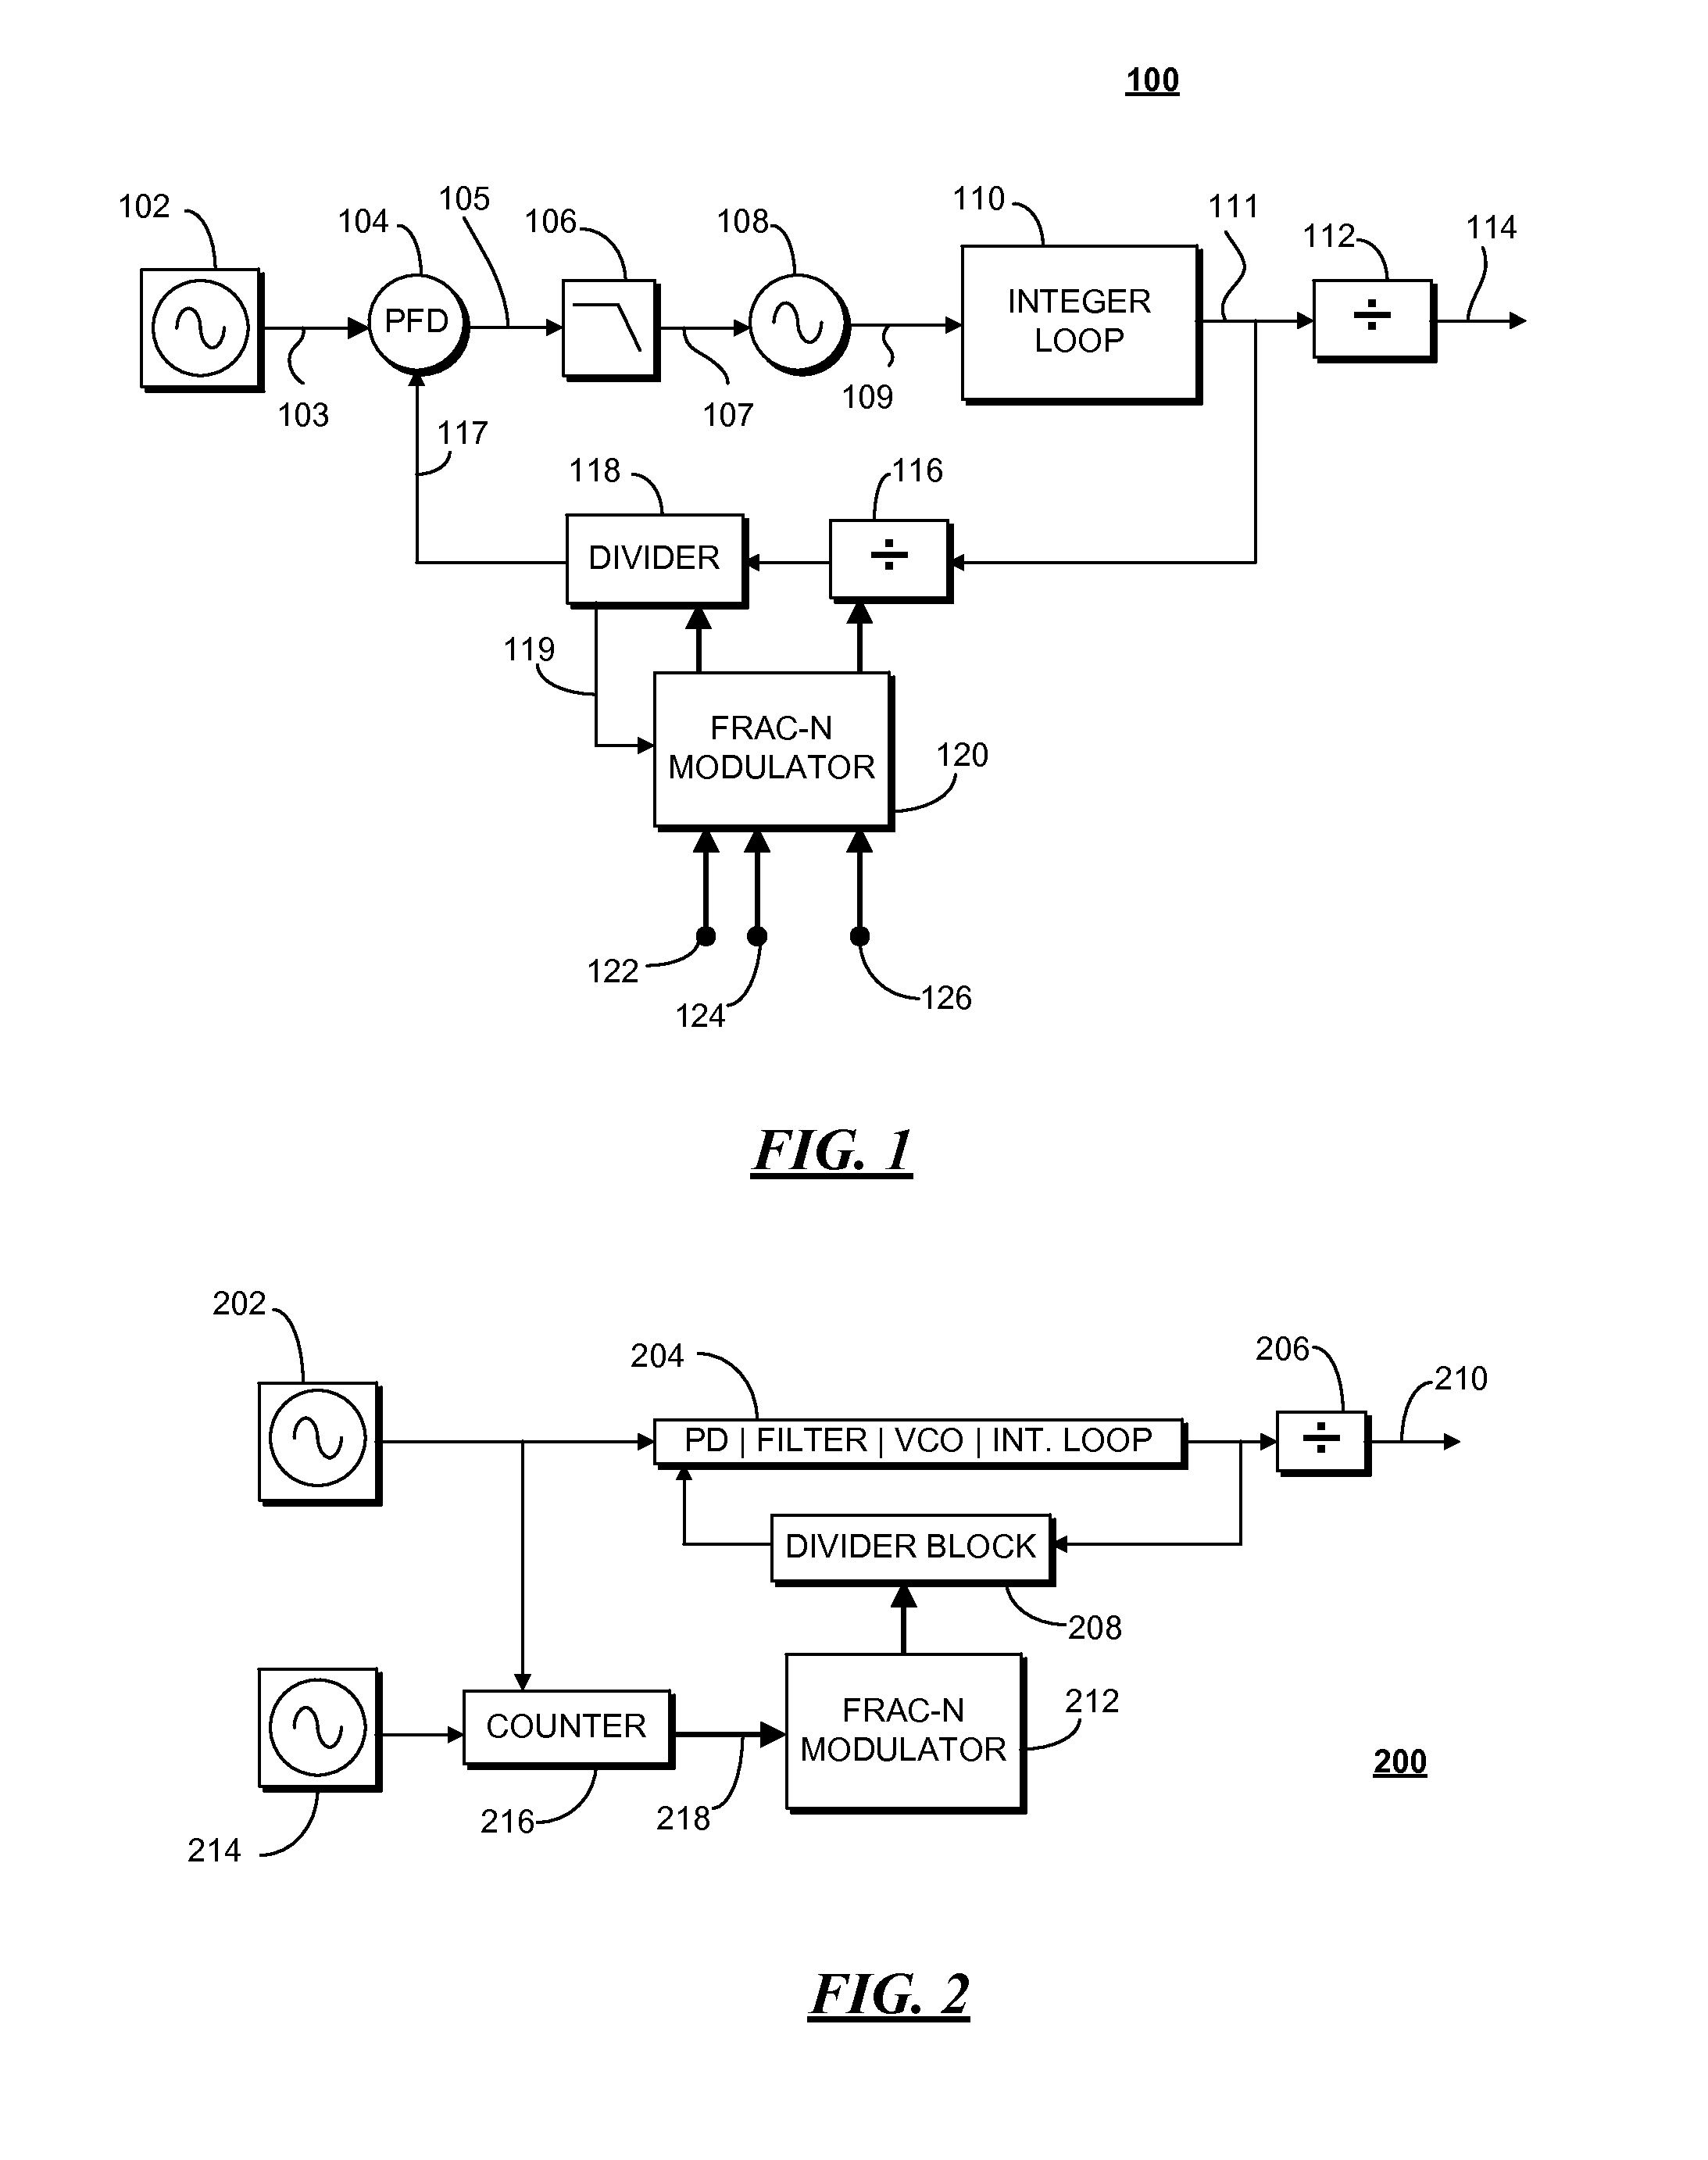 Method and apparatus for single port modulation using a fractional-n modulator